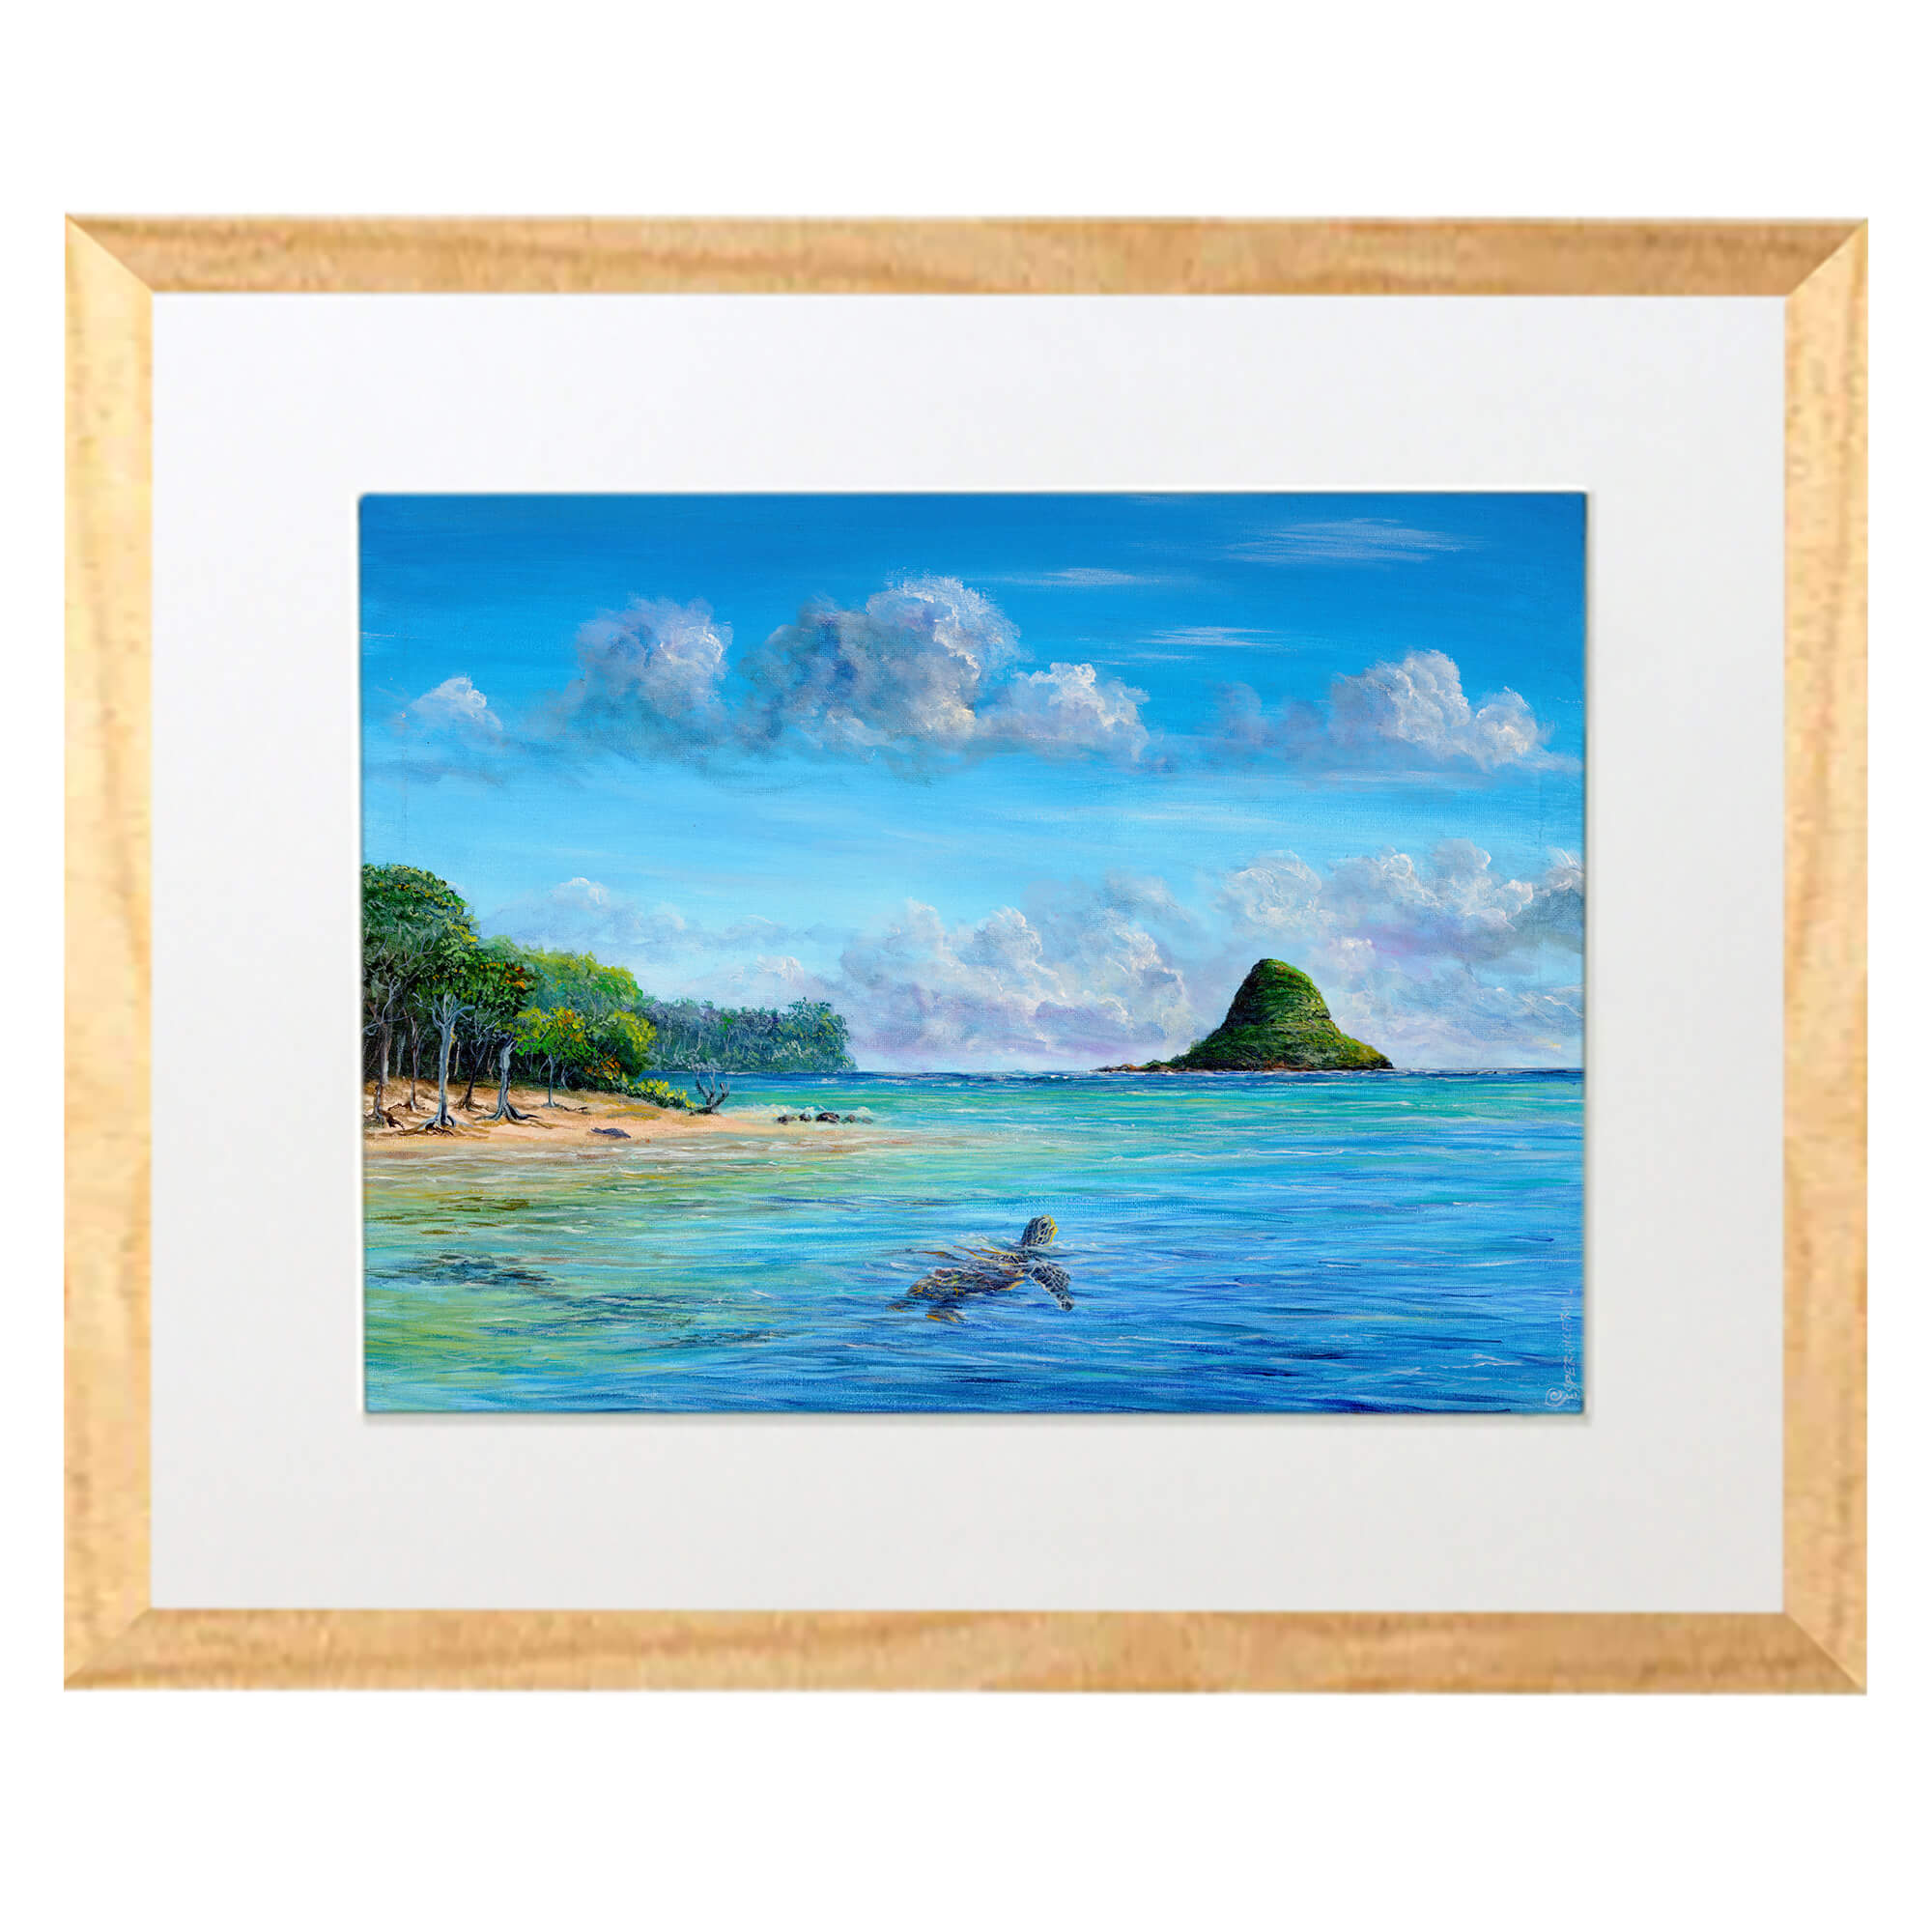 Matted art print with wood frame featuring a turtle underwater by hawaii artist Esperance Rakotonirina